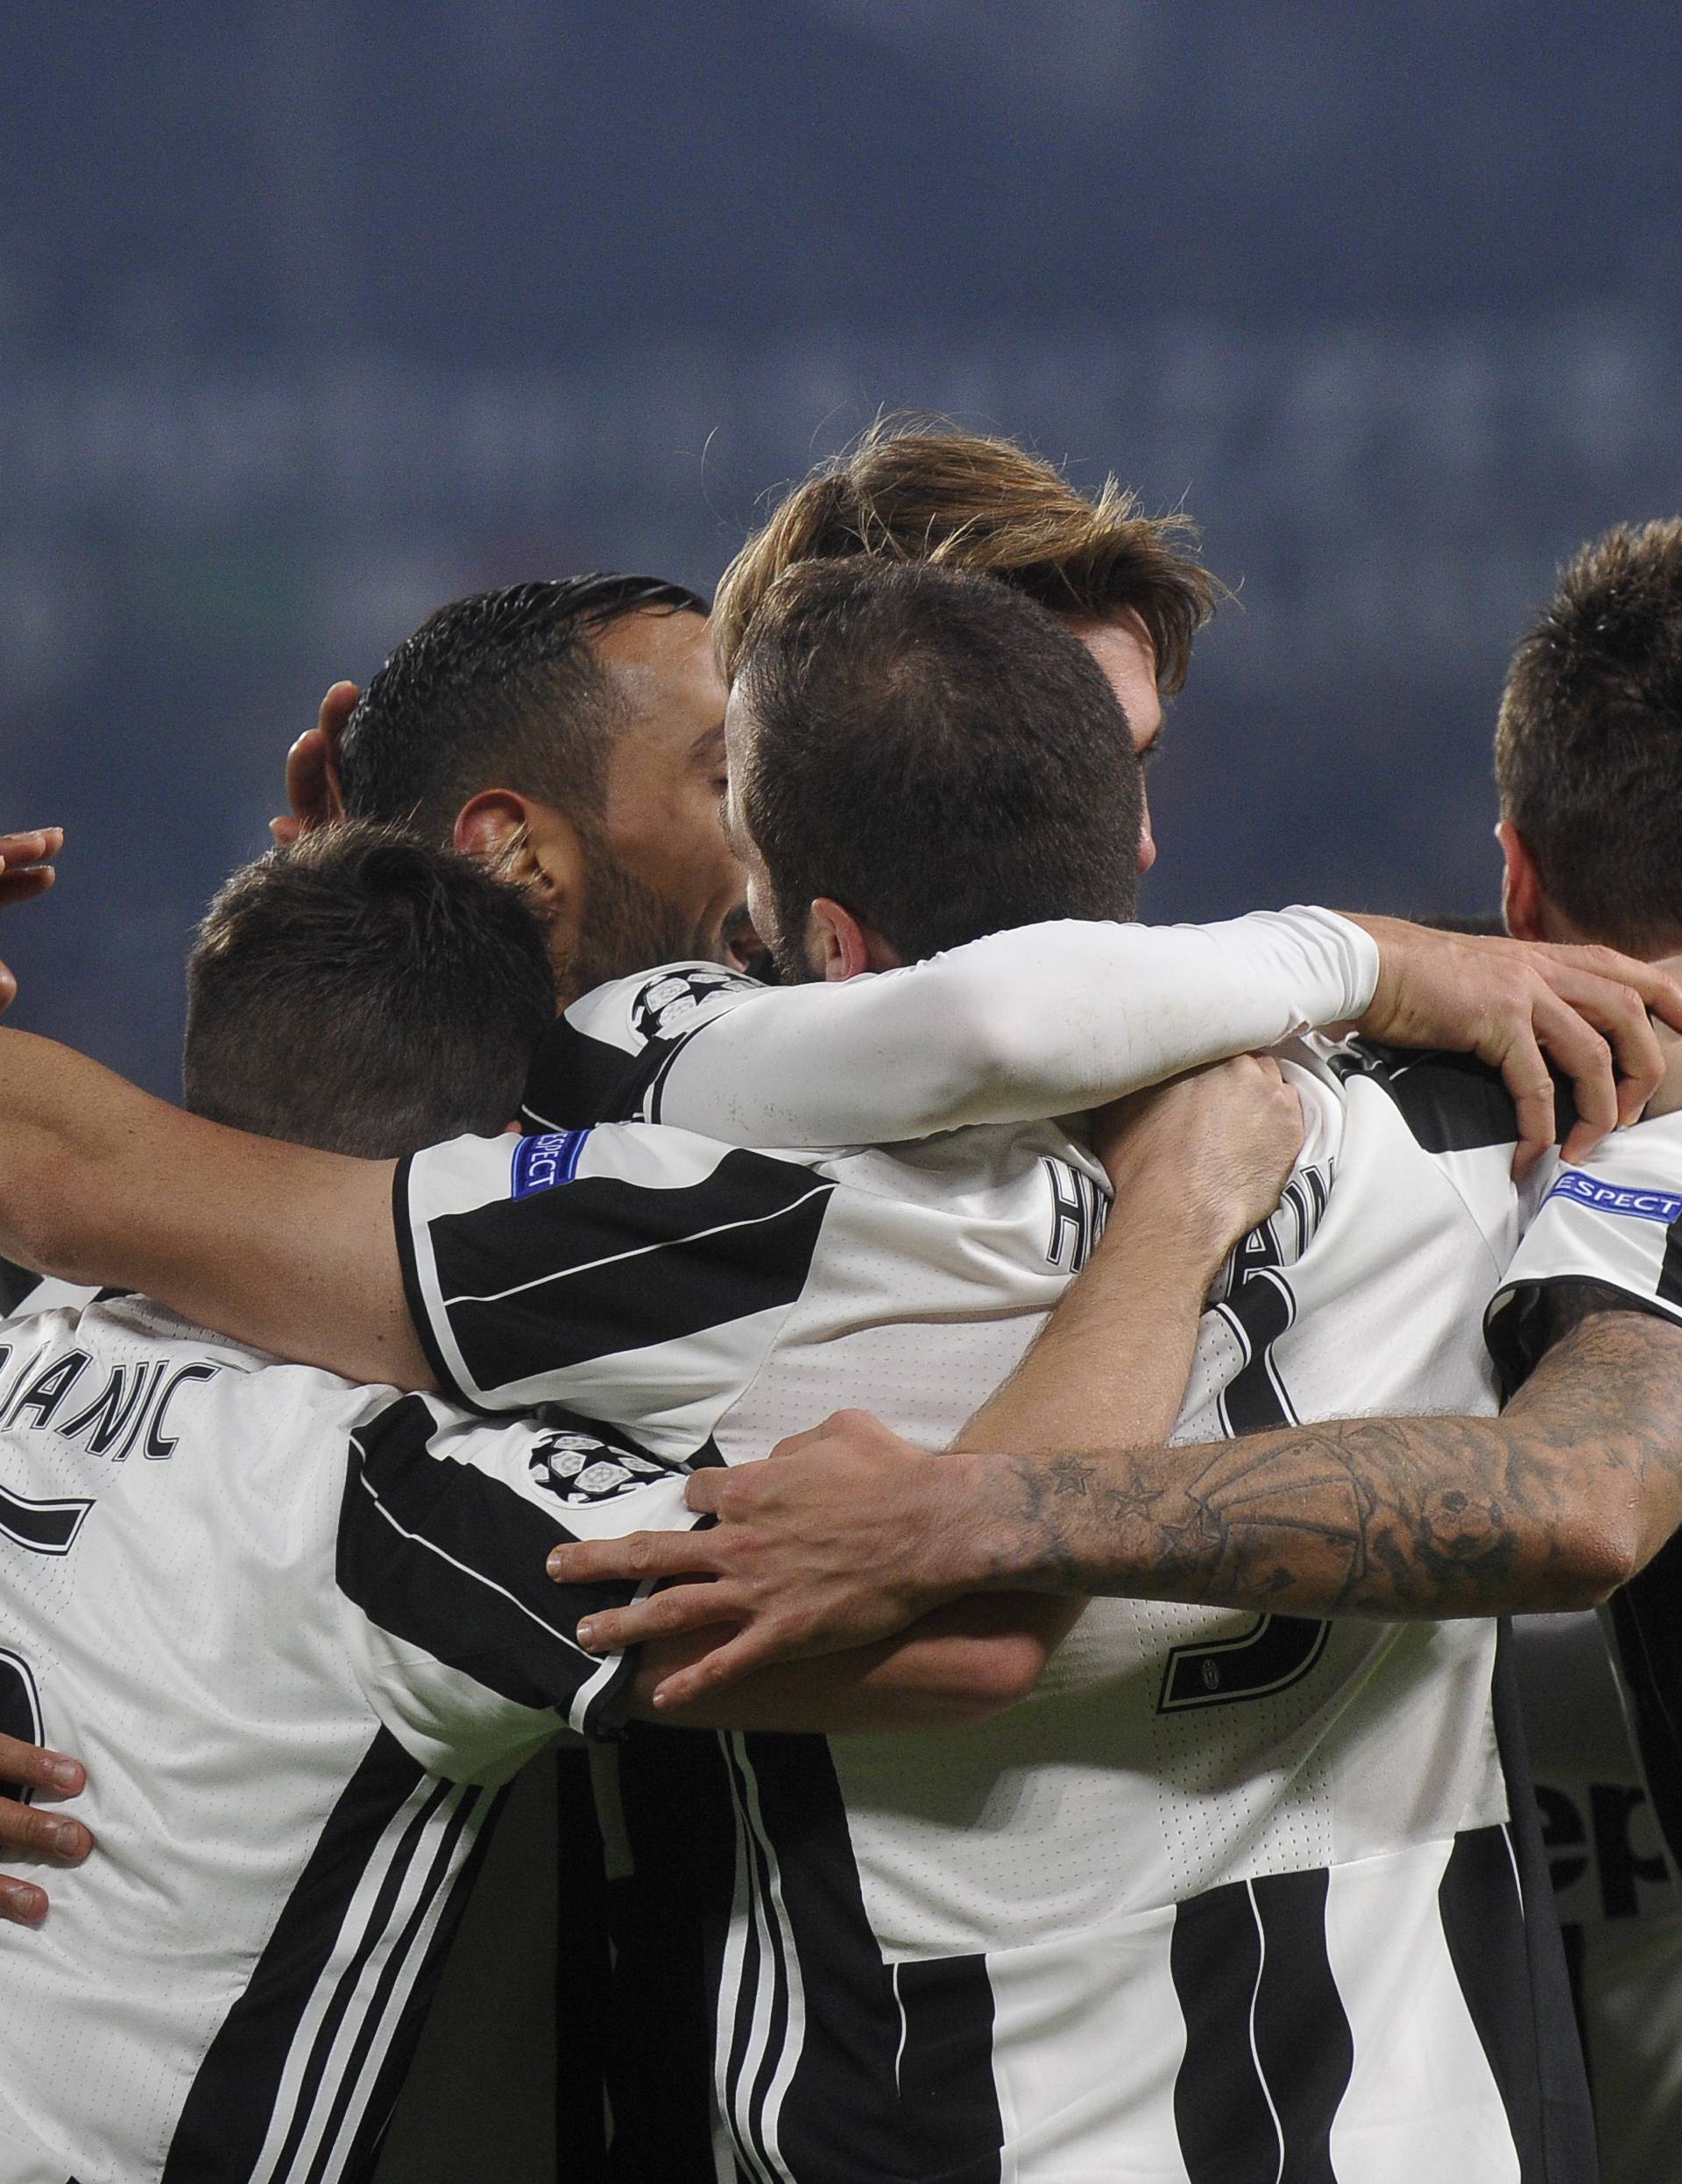 Juventus' Gonzalo Higuain celebrates scoring their first goal with team mates